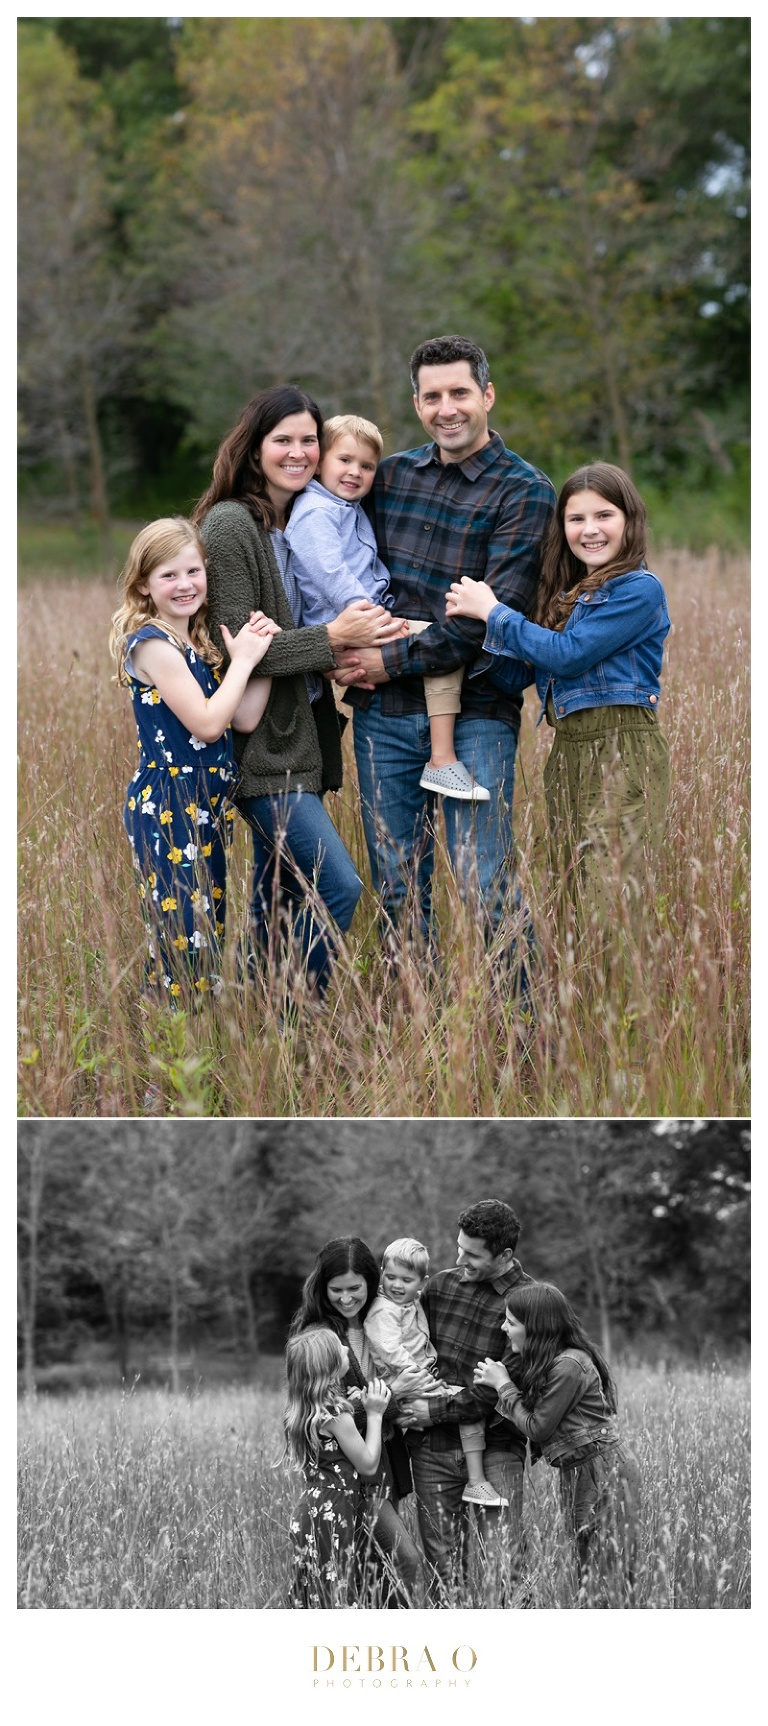 Family portrait session Tamarack Nature Center, Debra O Photography, Minneapolis Portrait Photographer, St.Paul family portrait photographer, 